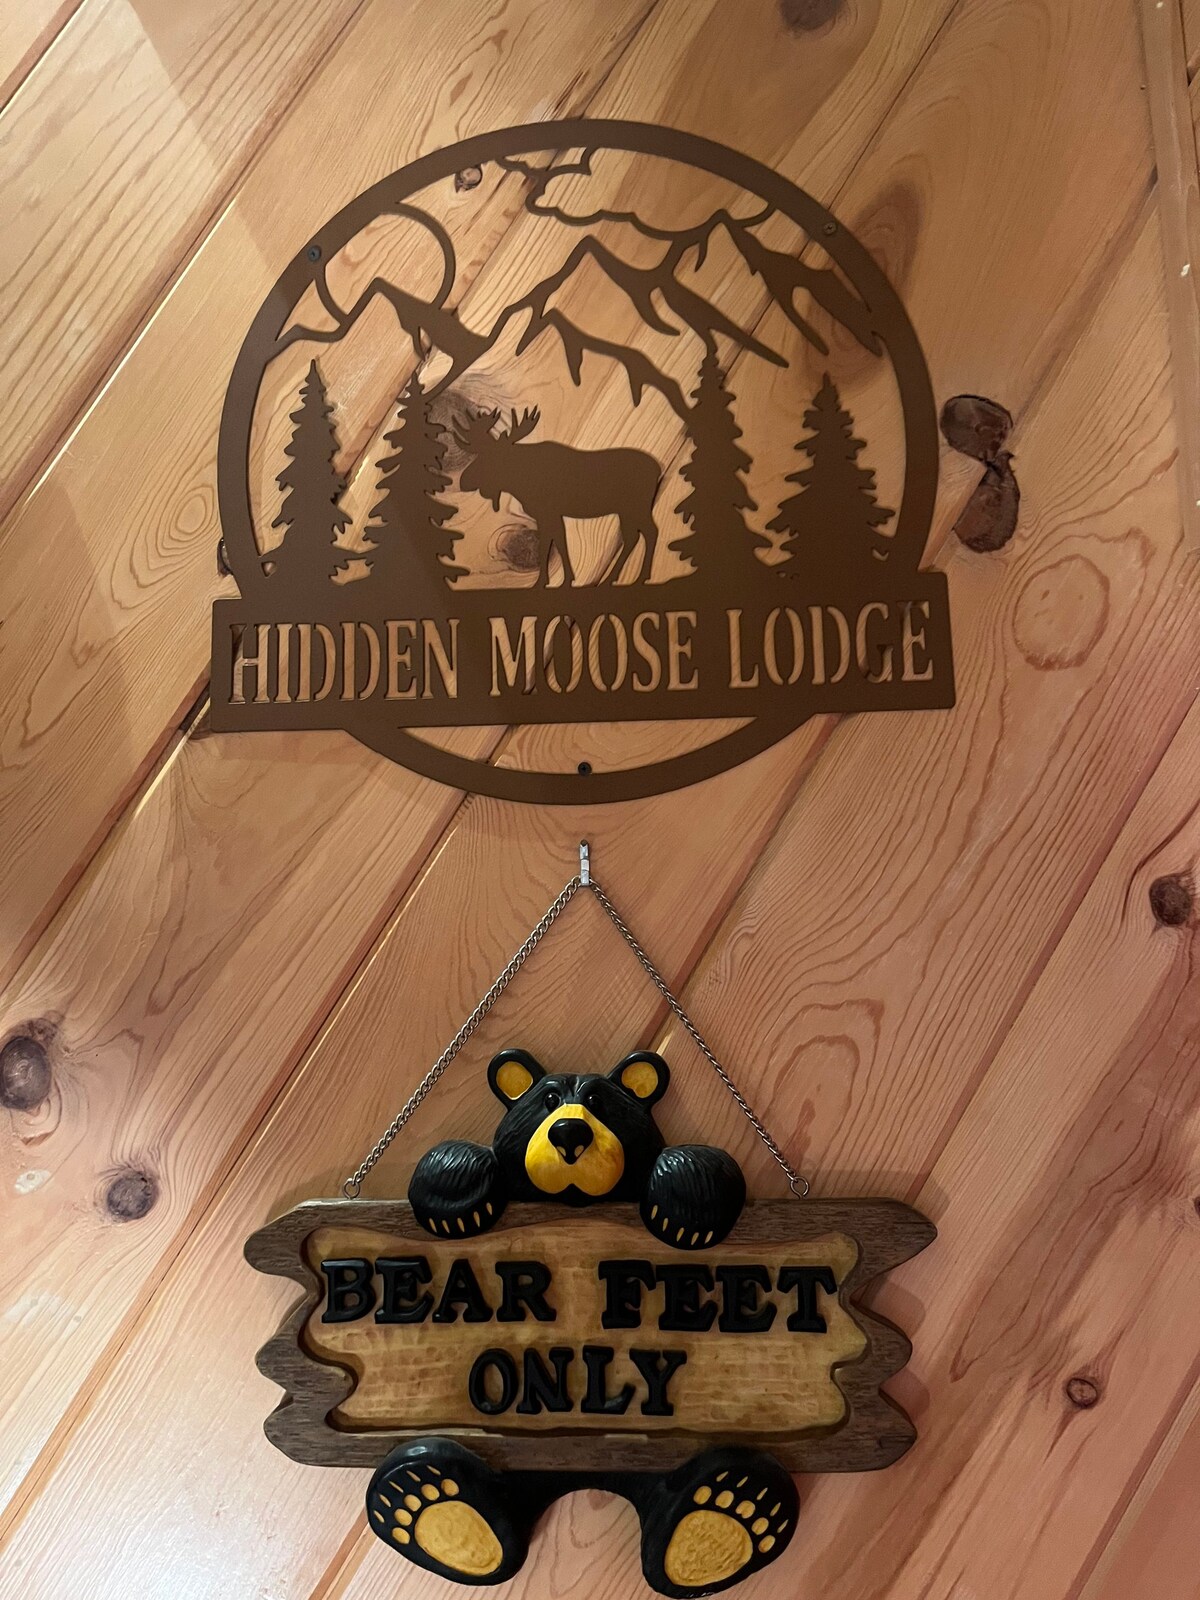 The Hidden Moose Lodge